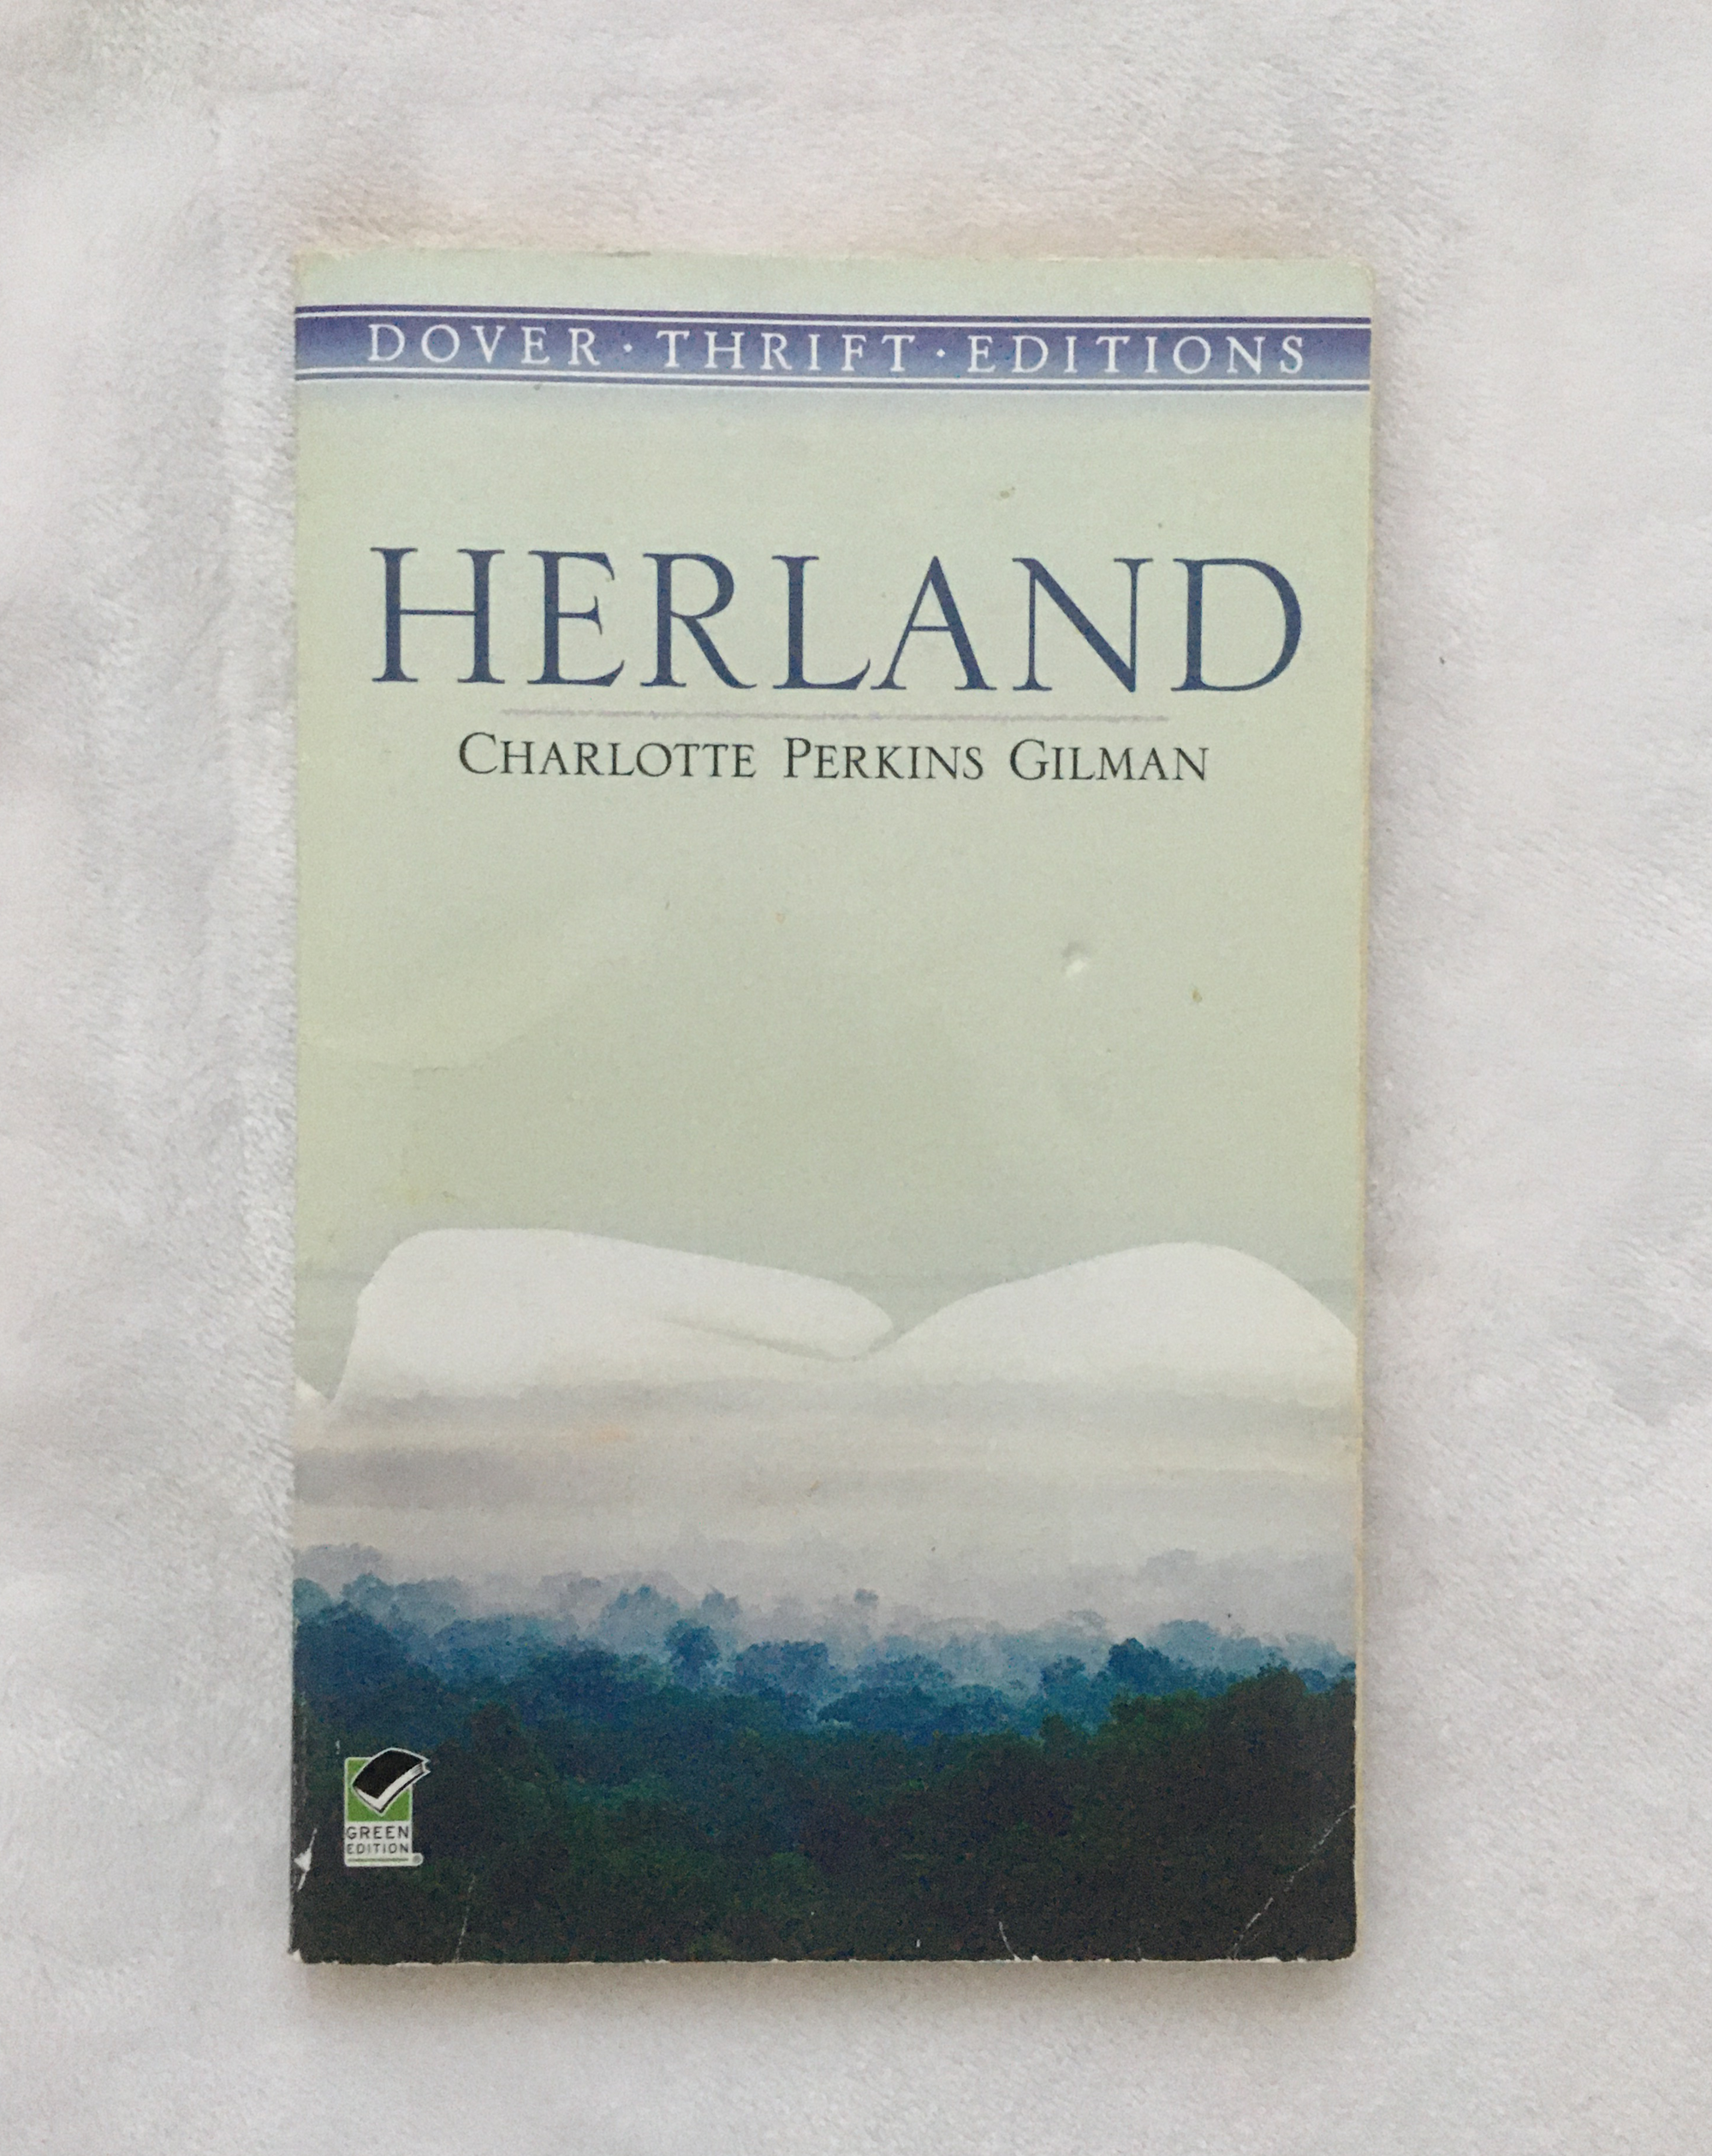 Herland by Charlotte Perkins Gilman, book, Ten Dollar Books, Ten Dollar Books